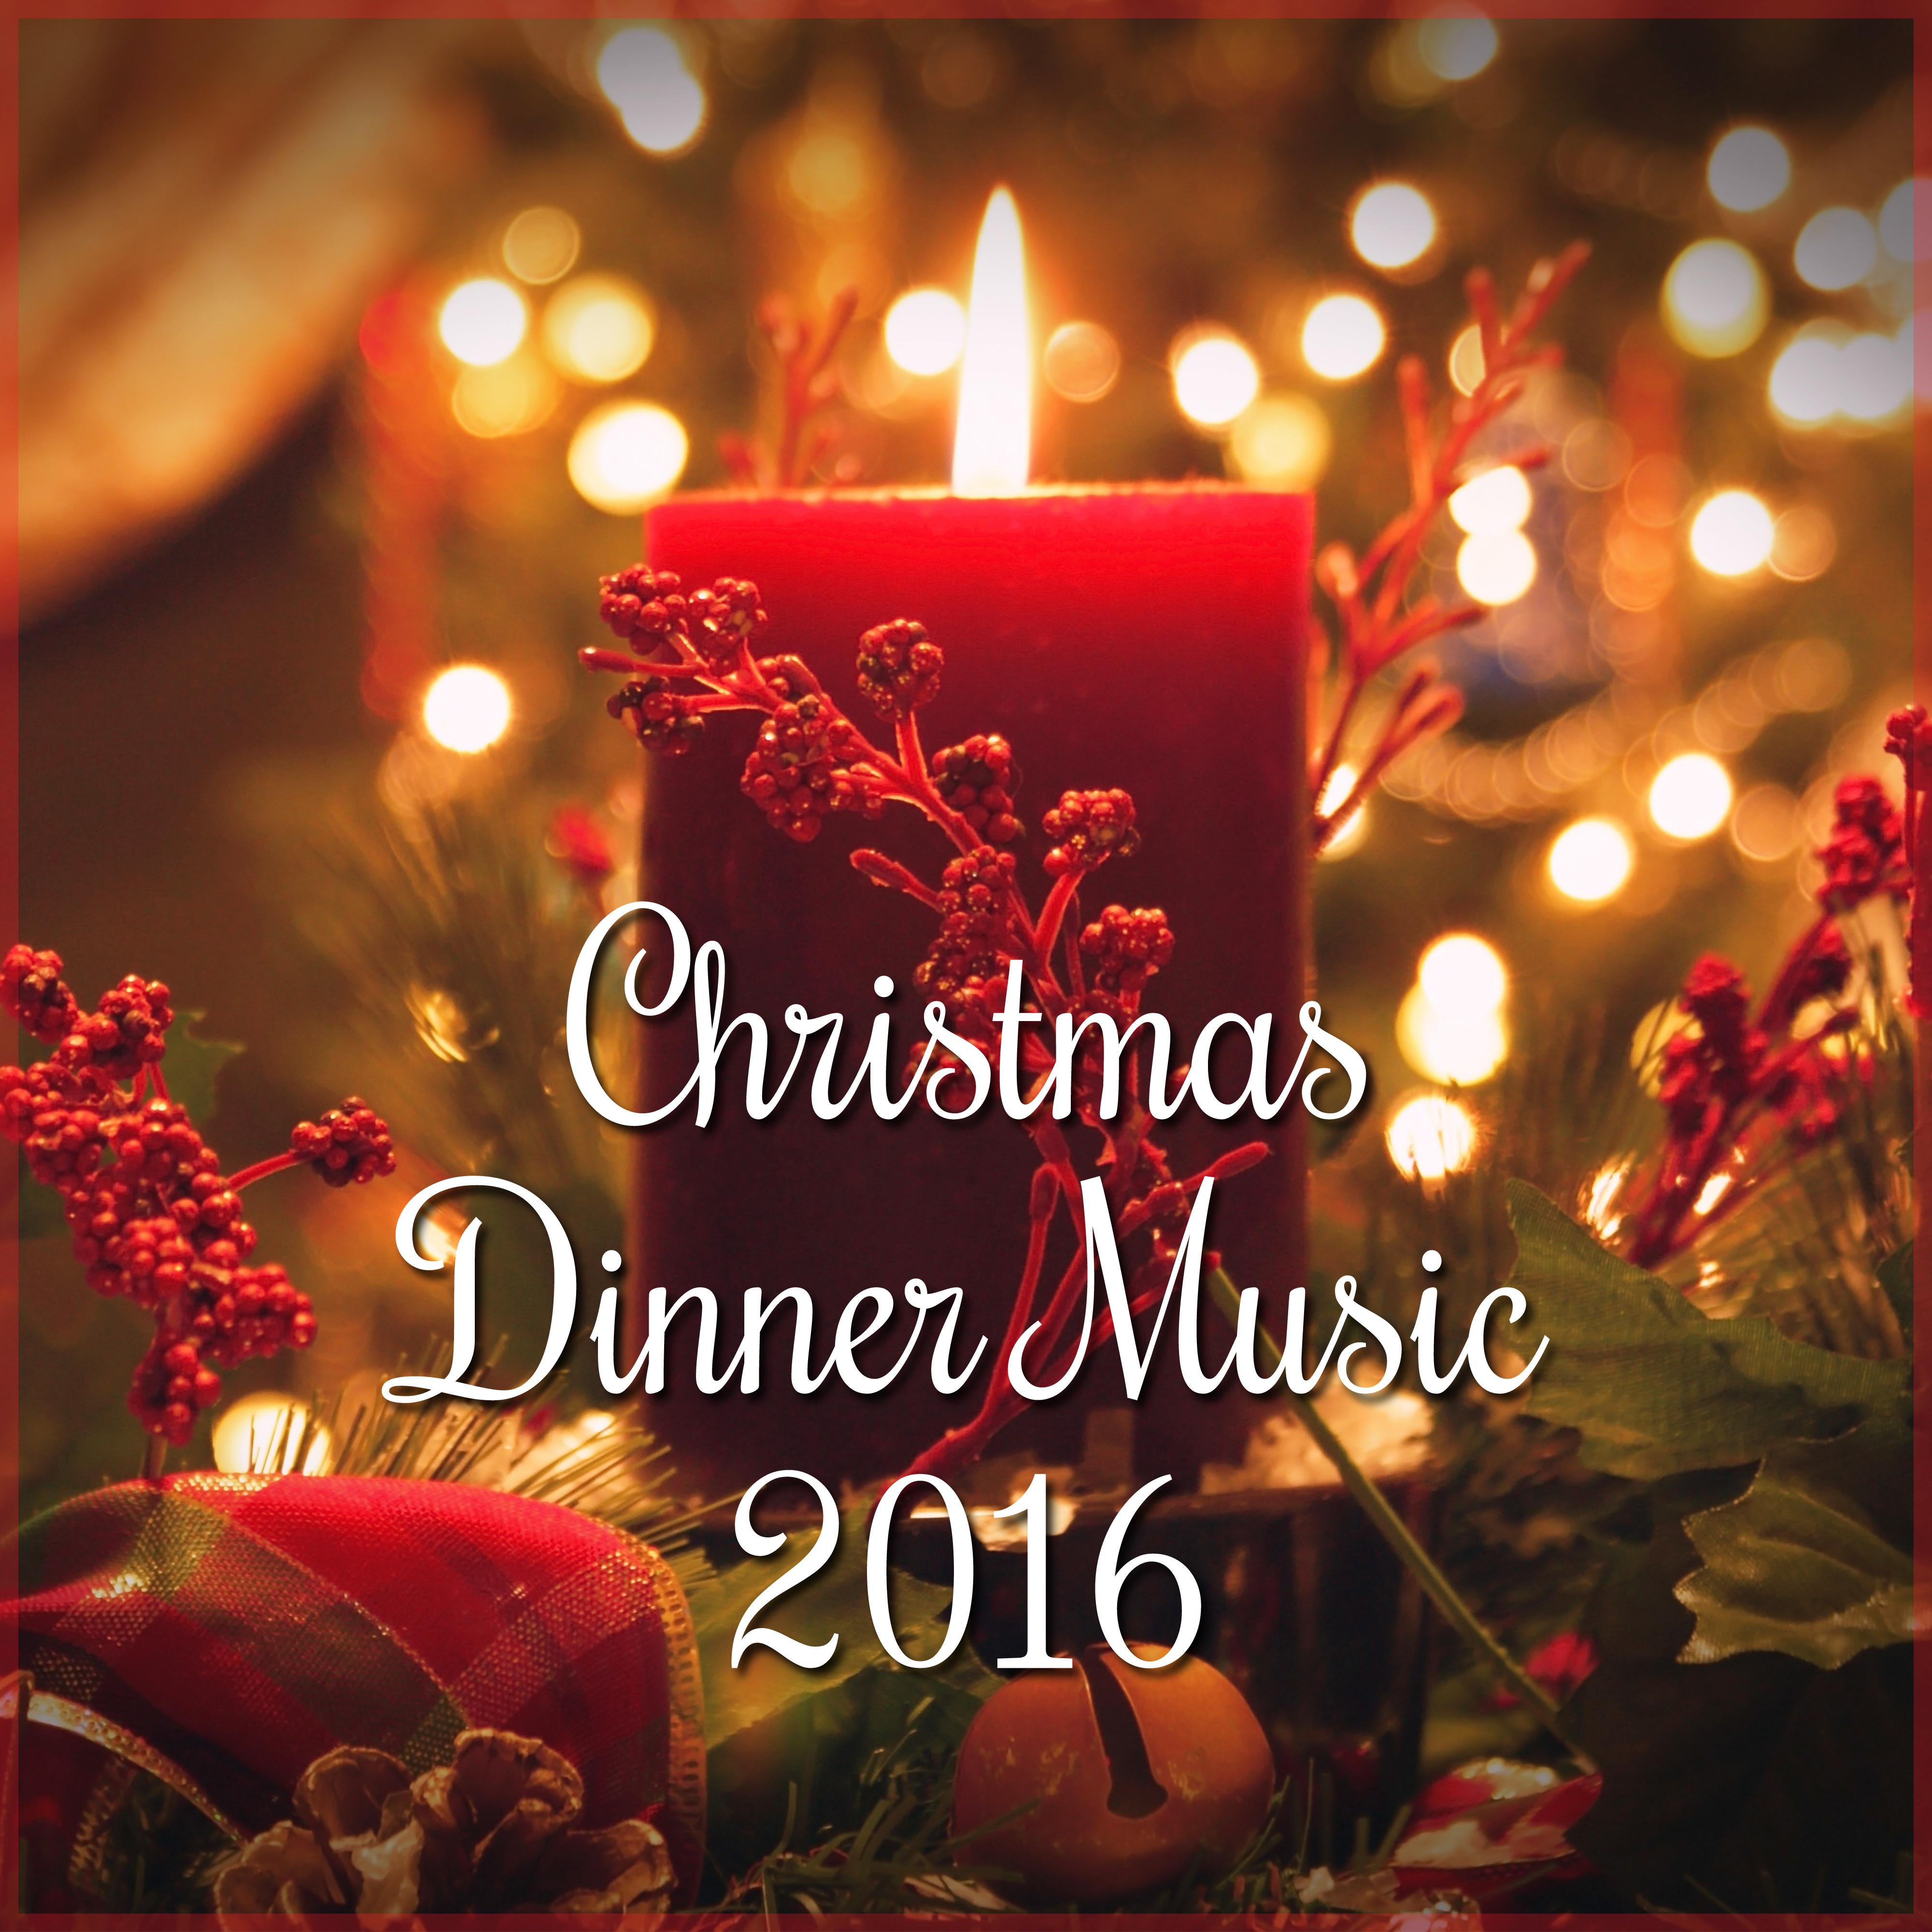 Christmas Dinner Music 2016  Ultimate Instrumental Music, Christmas Atmosphere, Music for Family Dinner